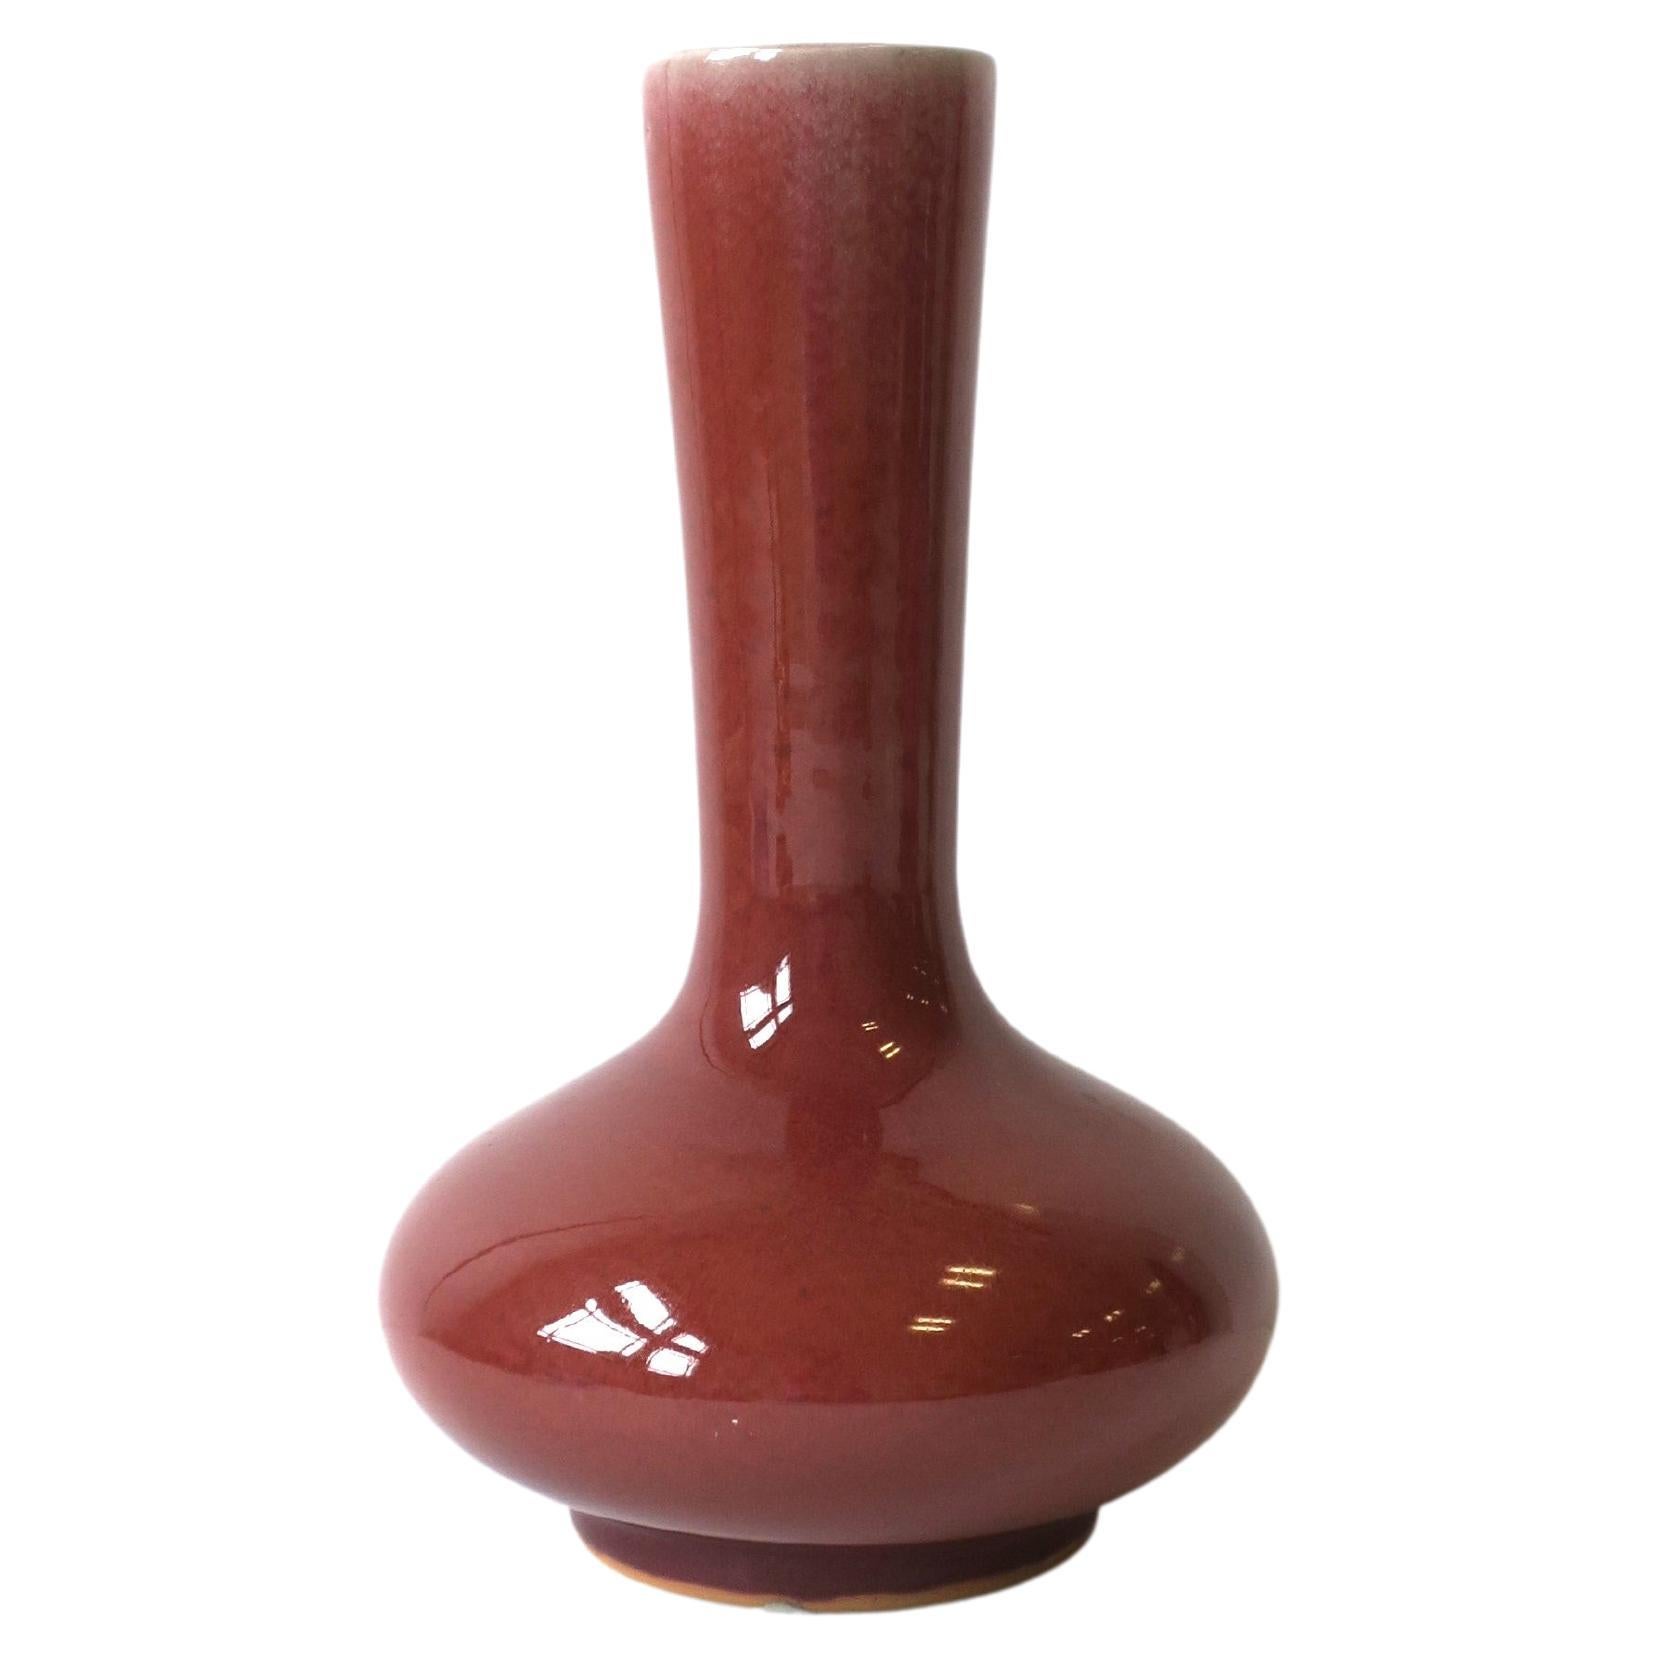 Red Burgundy Pottery Vase by Maitland-Smith